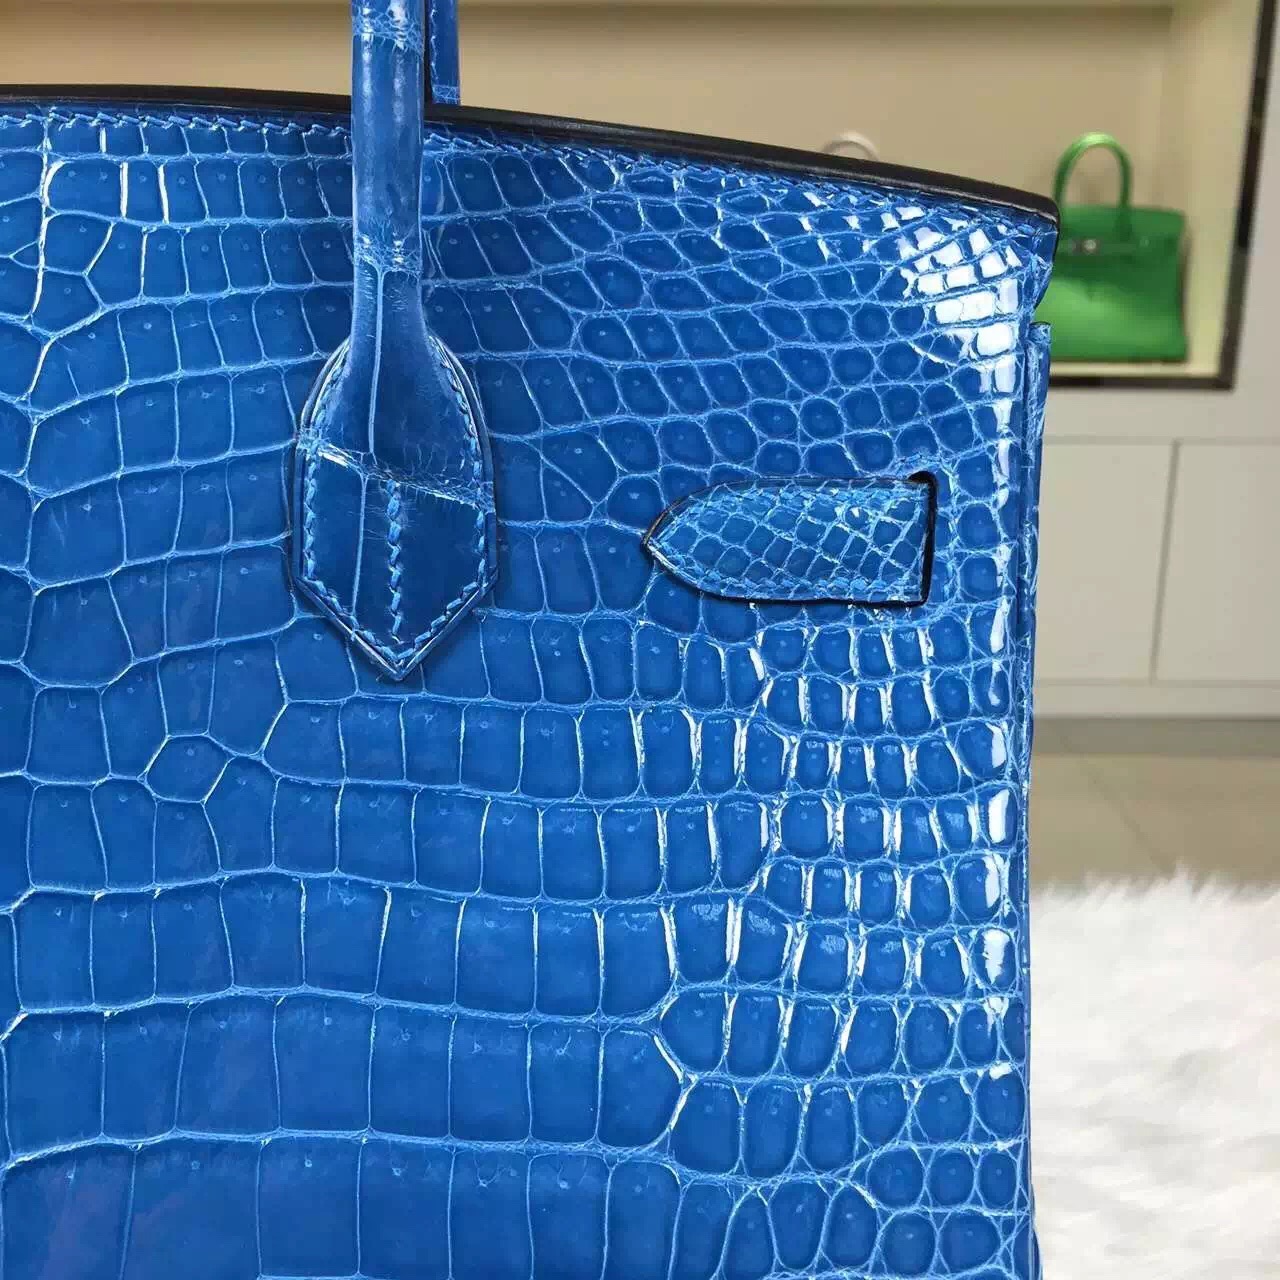 Discount Hermes 7Q Mykonos Blue Crocodile Leather Birkin30